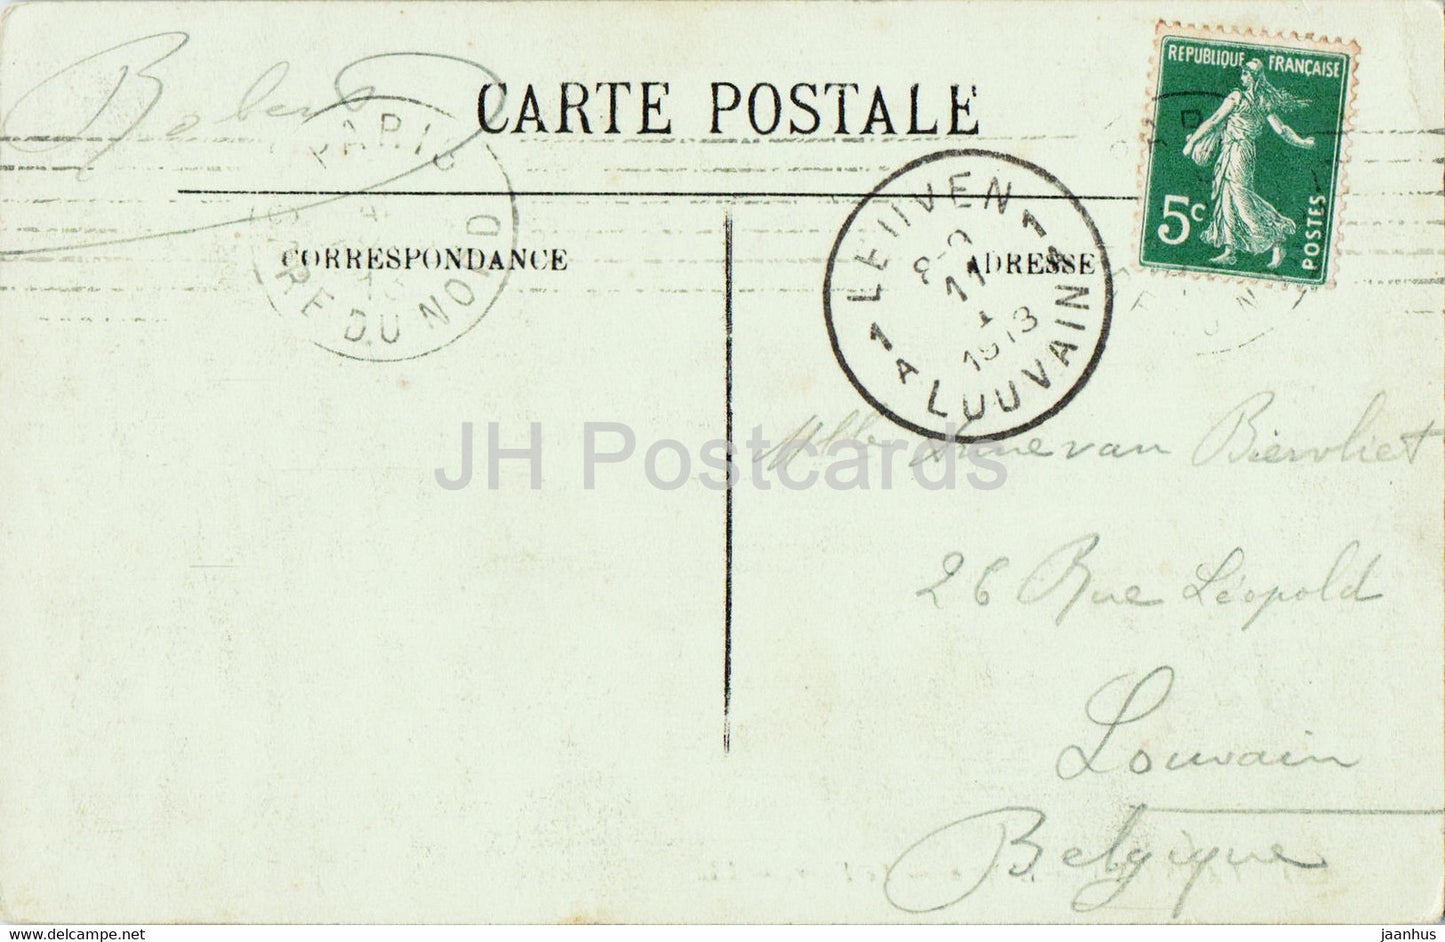 Paris - L'Opera - Le Foyer - Theater - 990 - alte Postkarte - 1913 - Frankreich - gebraucht